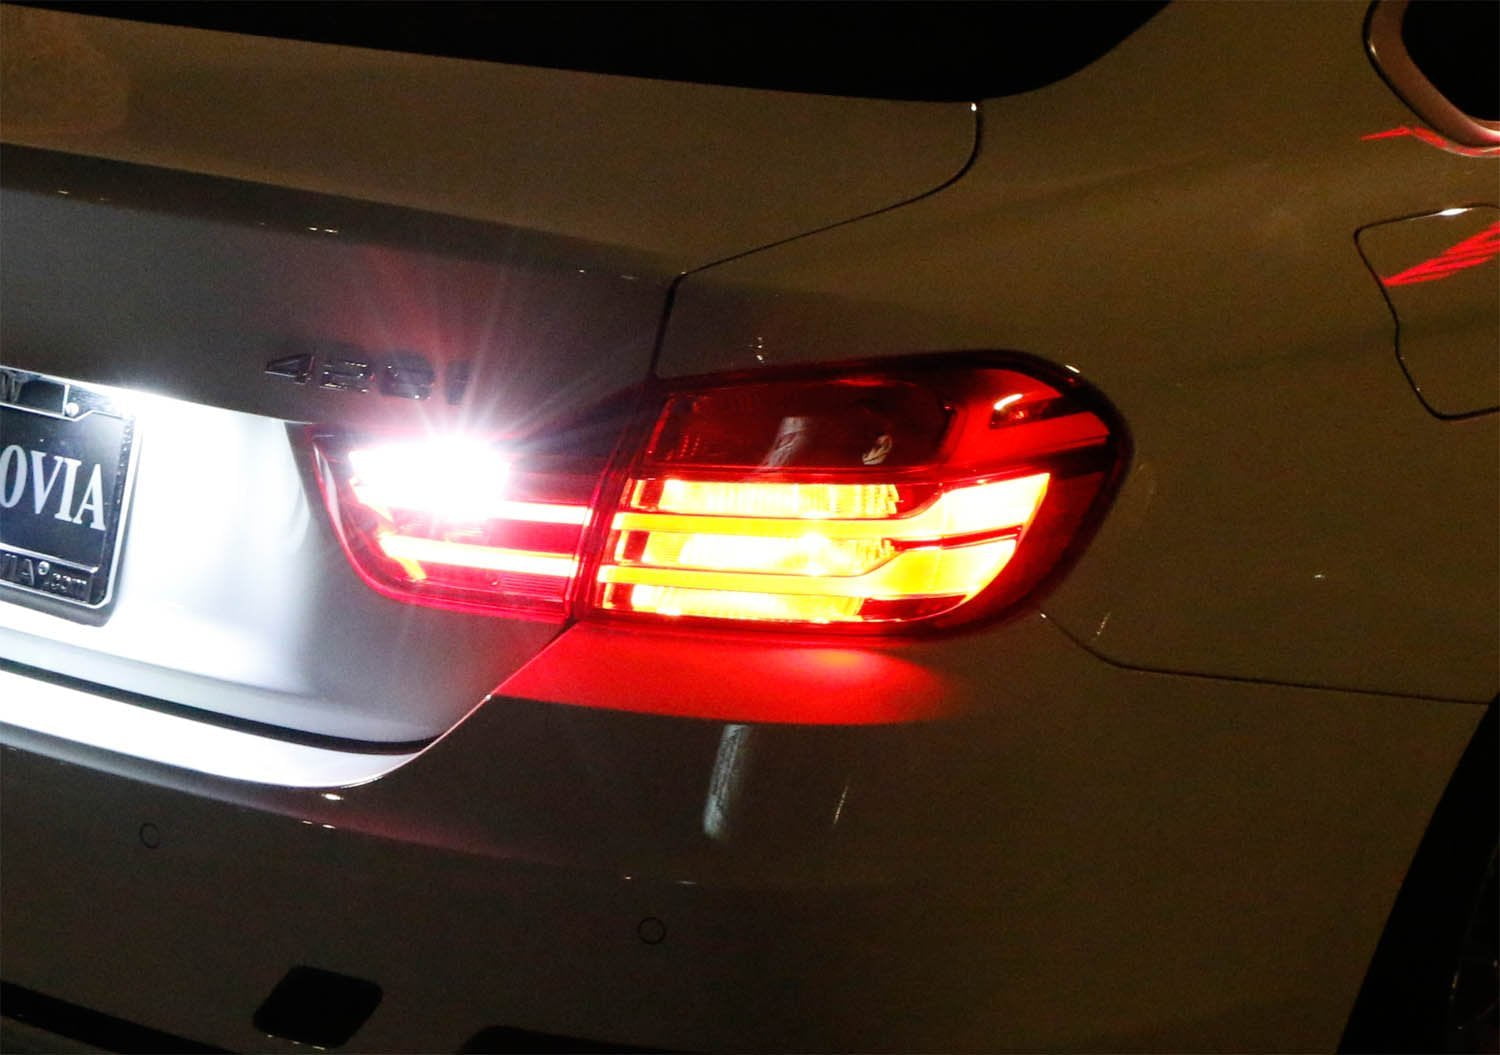 Red LED 30SMD Strobe Flashing Brake Tail Light Lamp Bulb For BMW E46 E60 E90 F30